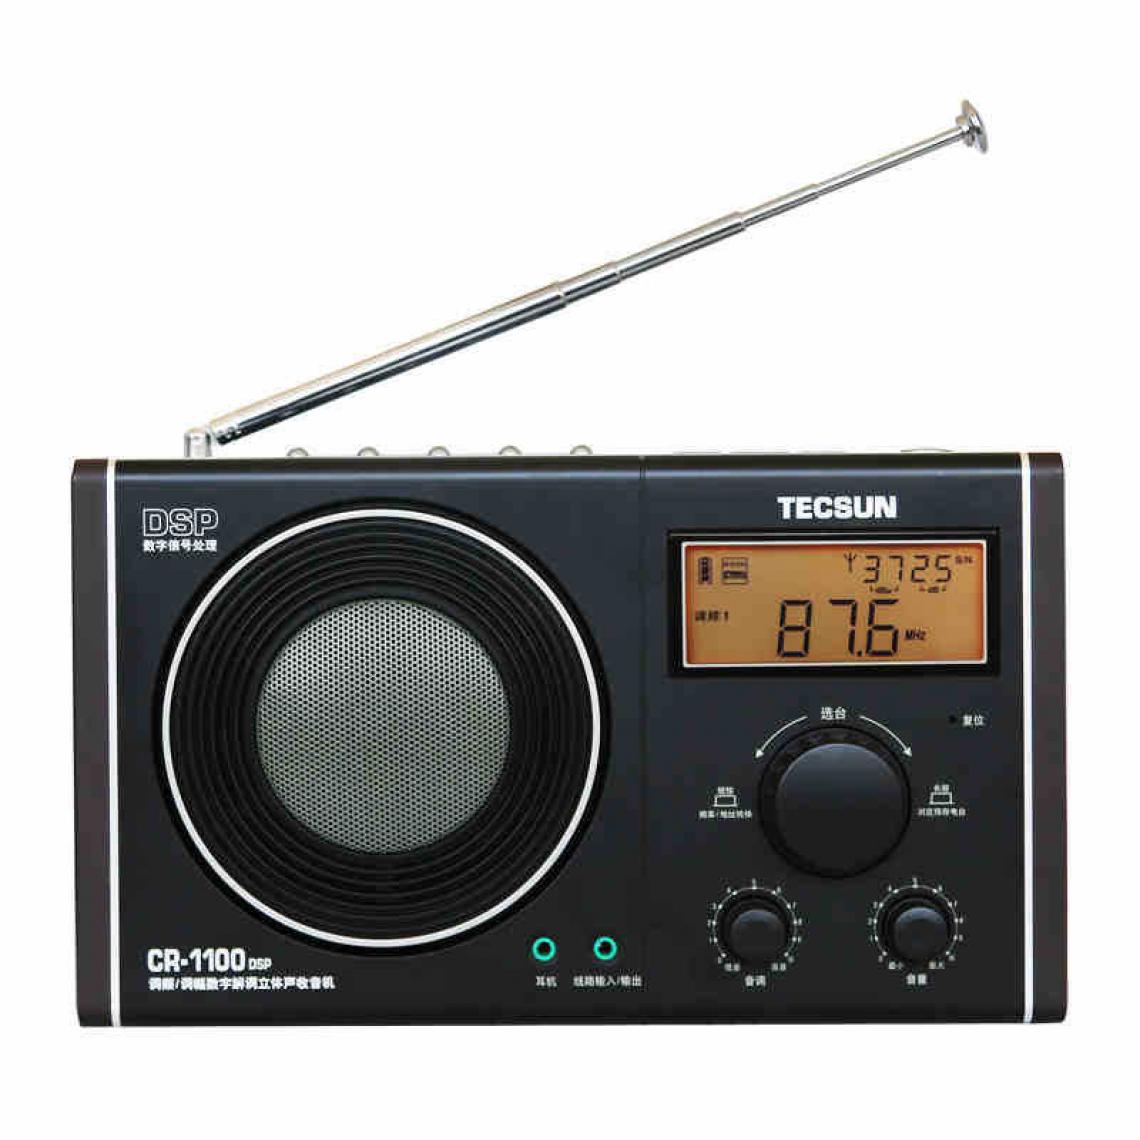 Universal - Cr 1100 DSP AM/FM radio stéréo radio FM portable rétro 87108 MHz/65108 MHz/5221620 kHz AM/FM radio stéréo | - Radio